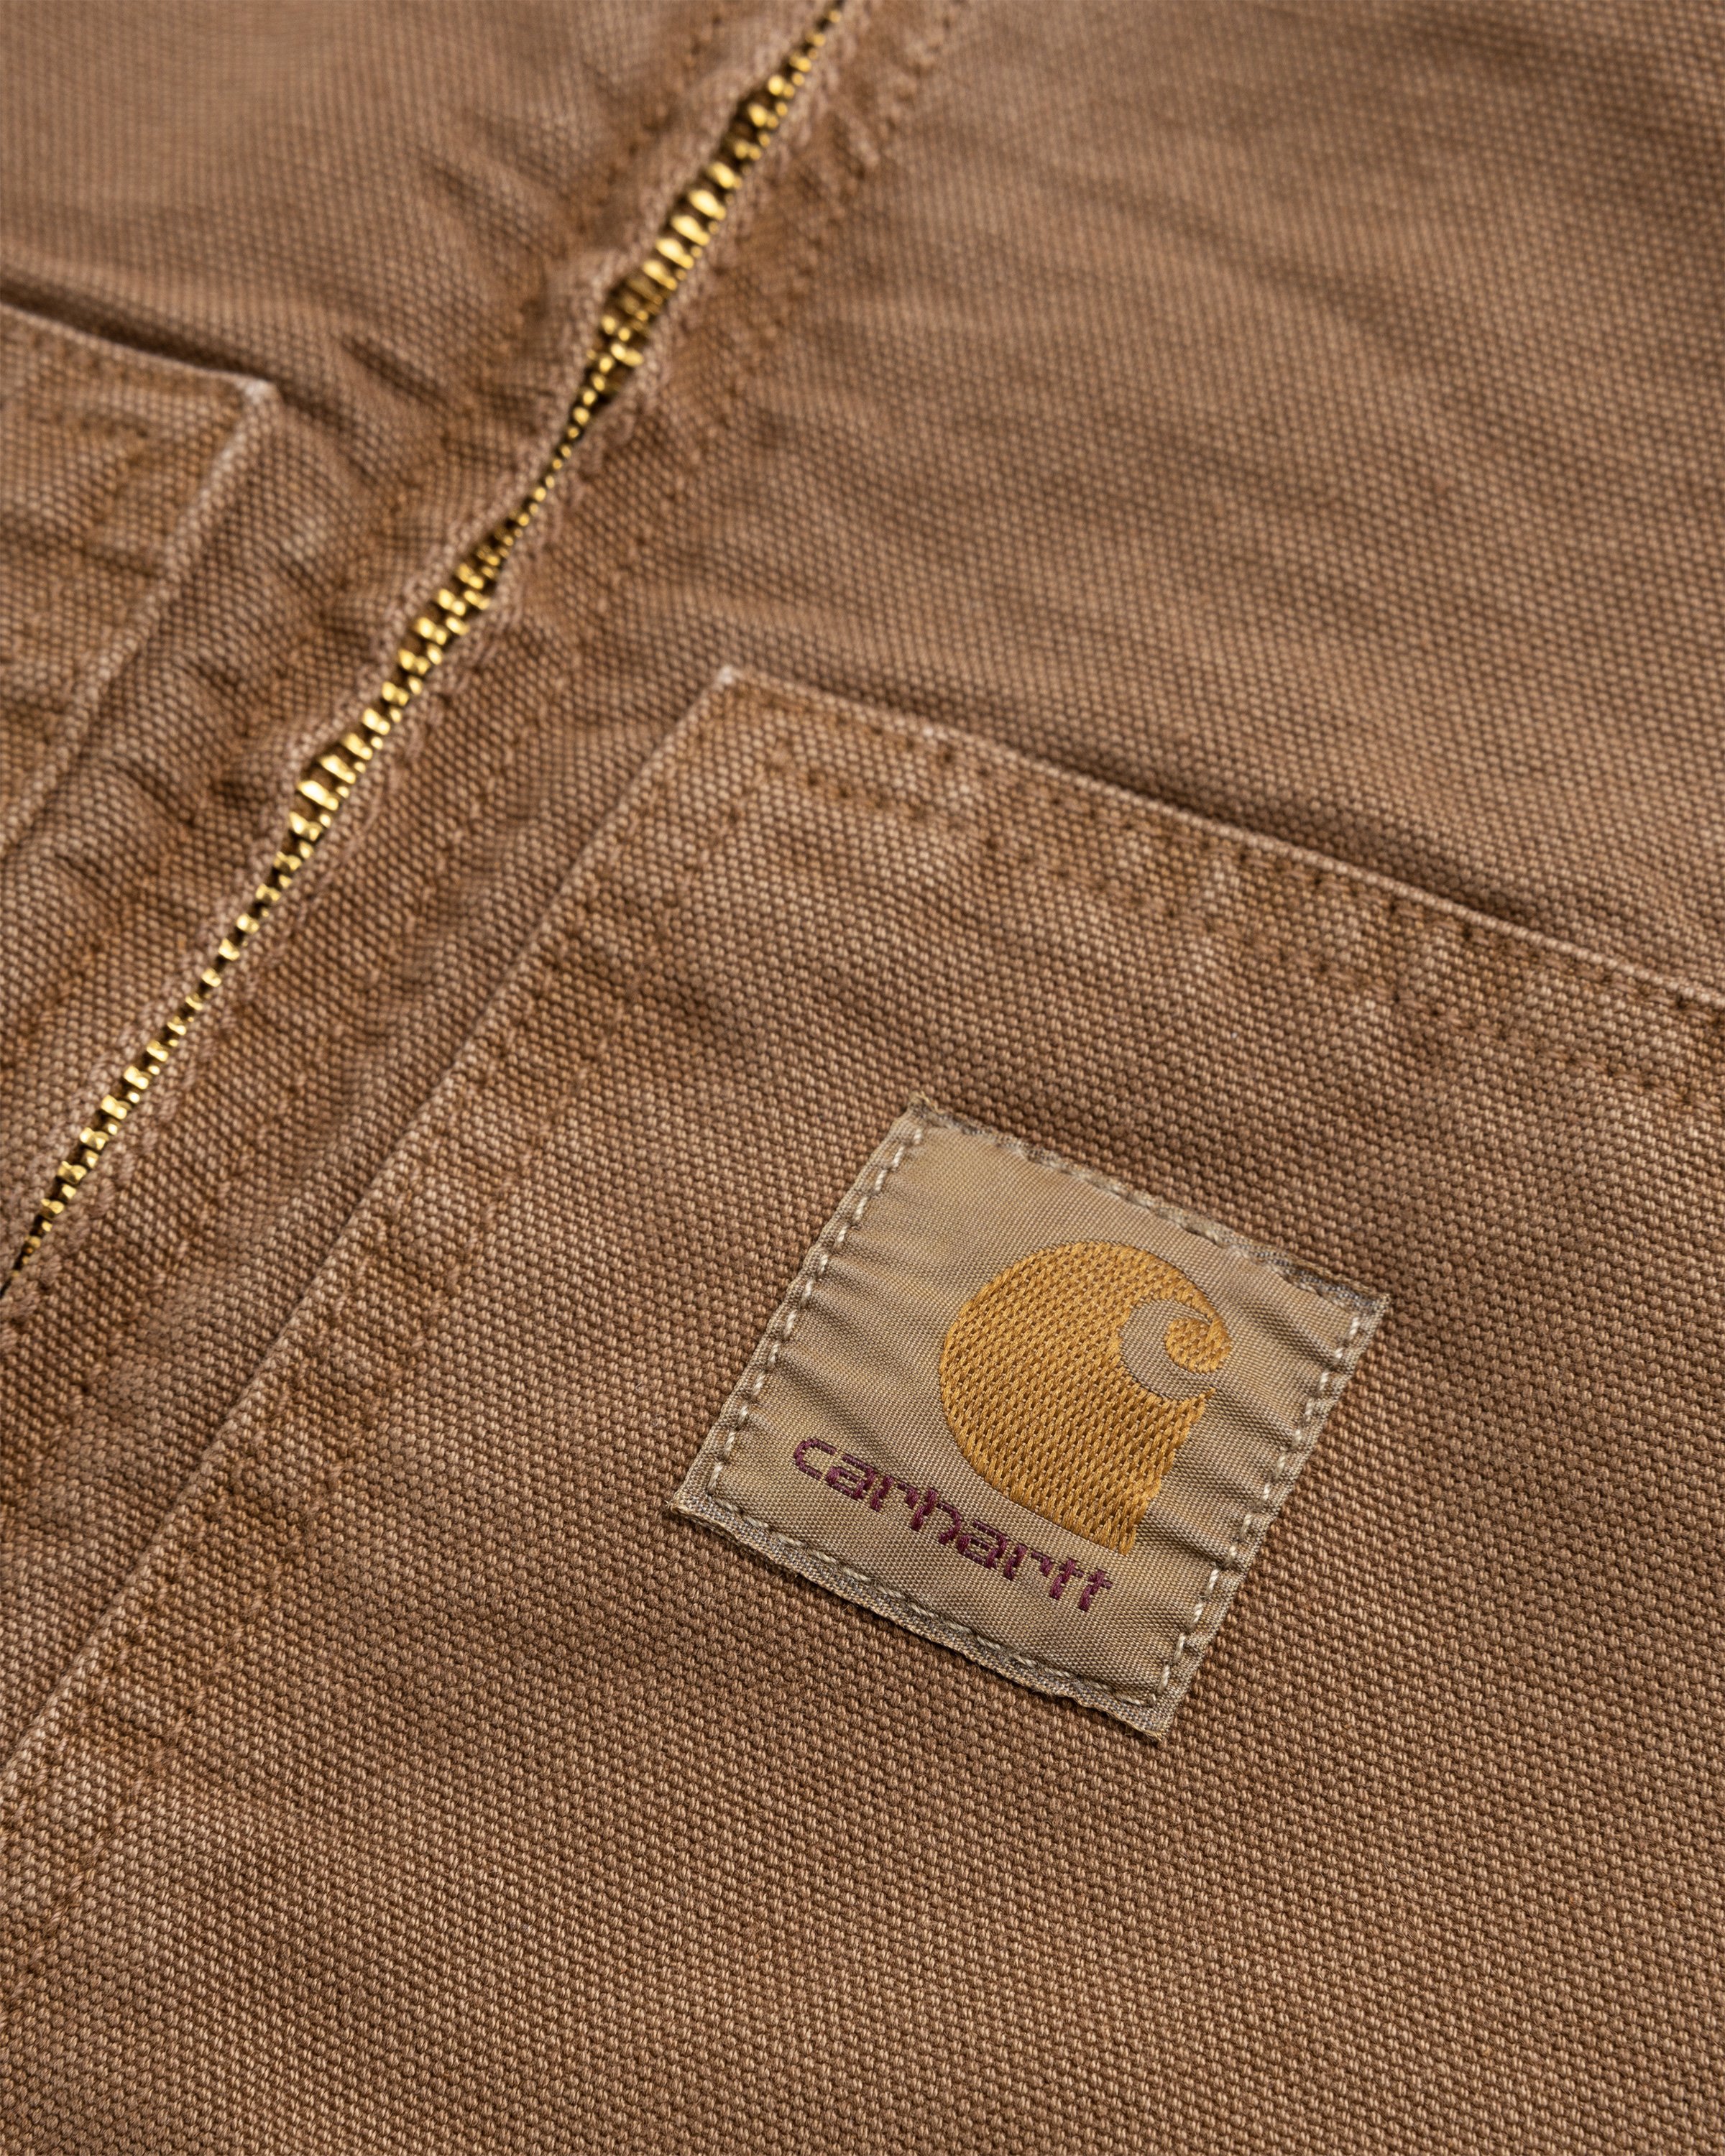 Carhartt WIP - Arling Jacket Faded Tamarind - Clothing - Brown - Image 6